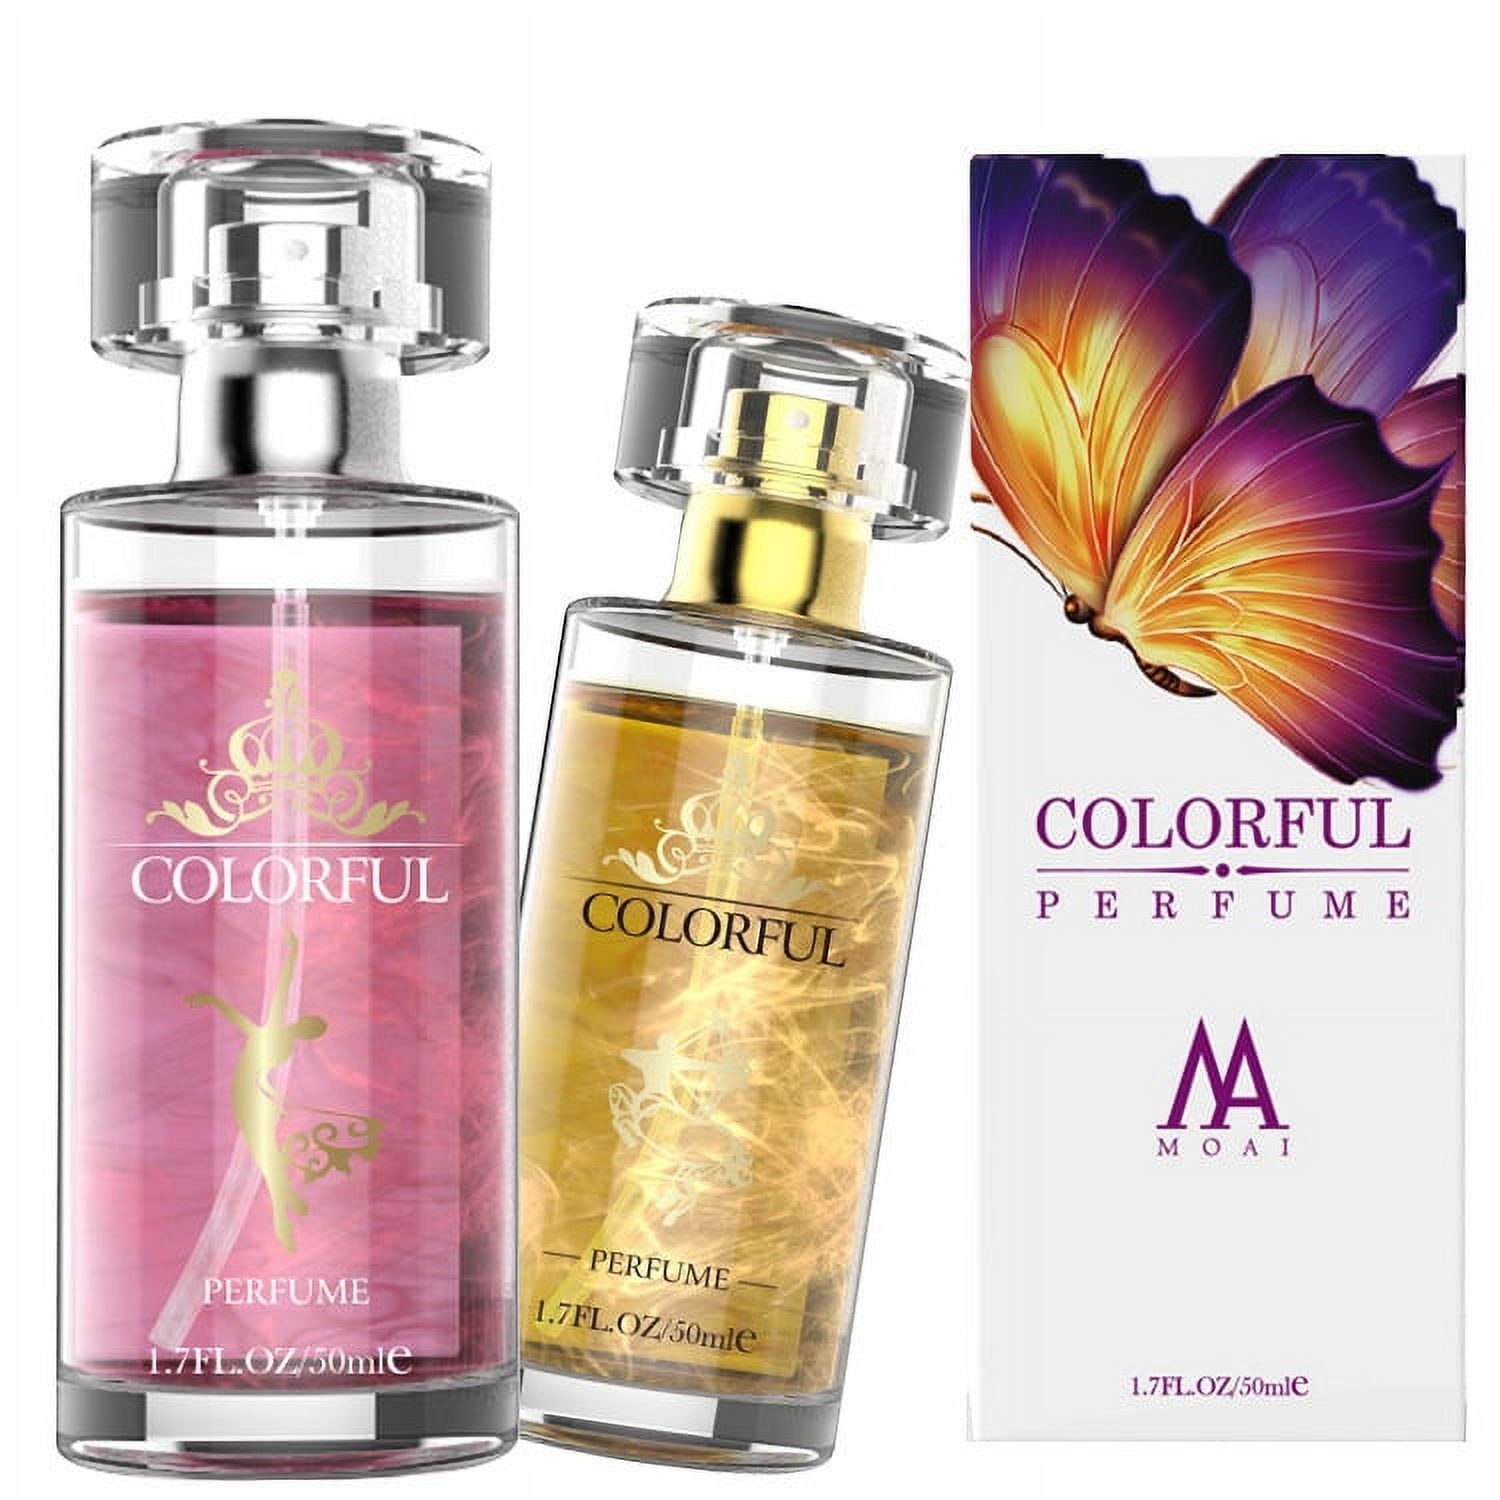 Lure Pheromone Perfume,Pheromones Attractant Oil Spray to Attract Men and  Women,Sex Pheromones Cologne for Men to Attract Women,Lure  Her,50ml/1.7Fl.Oz-Golden 